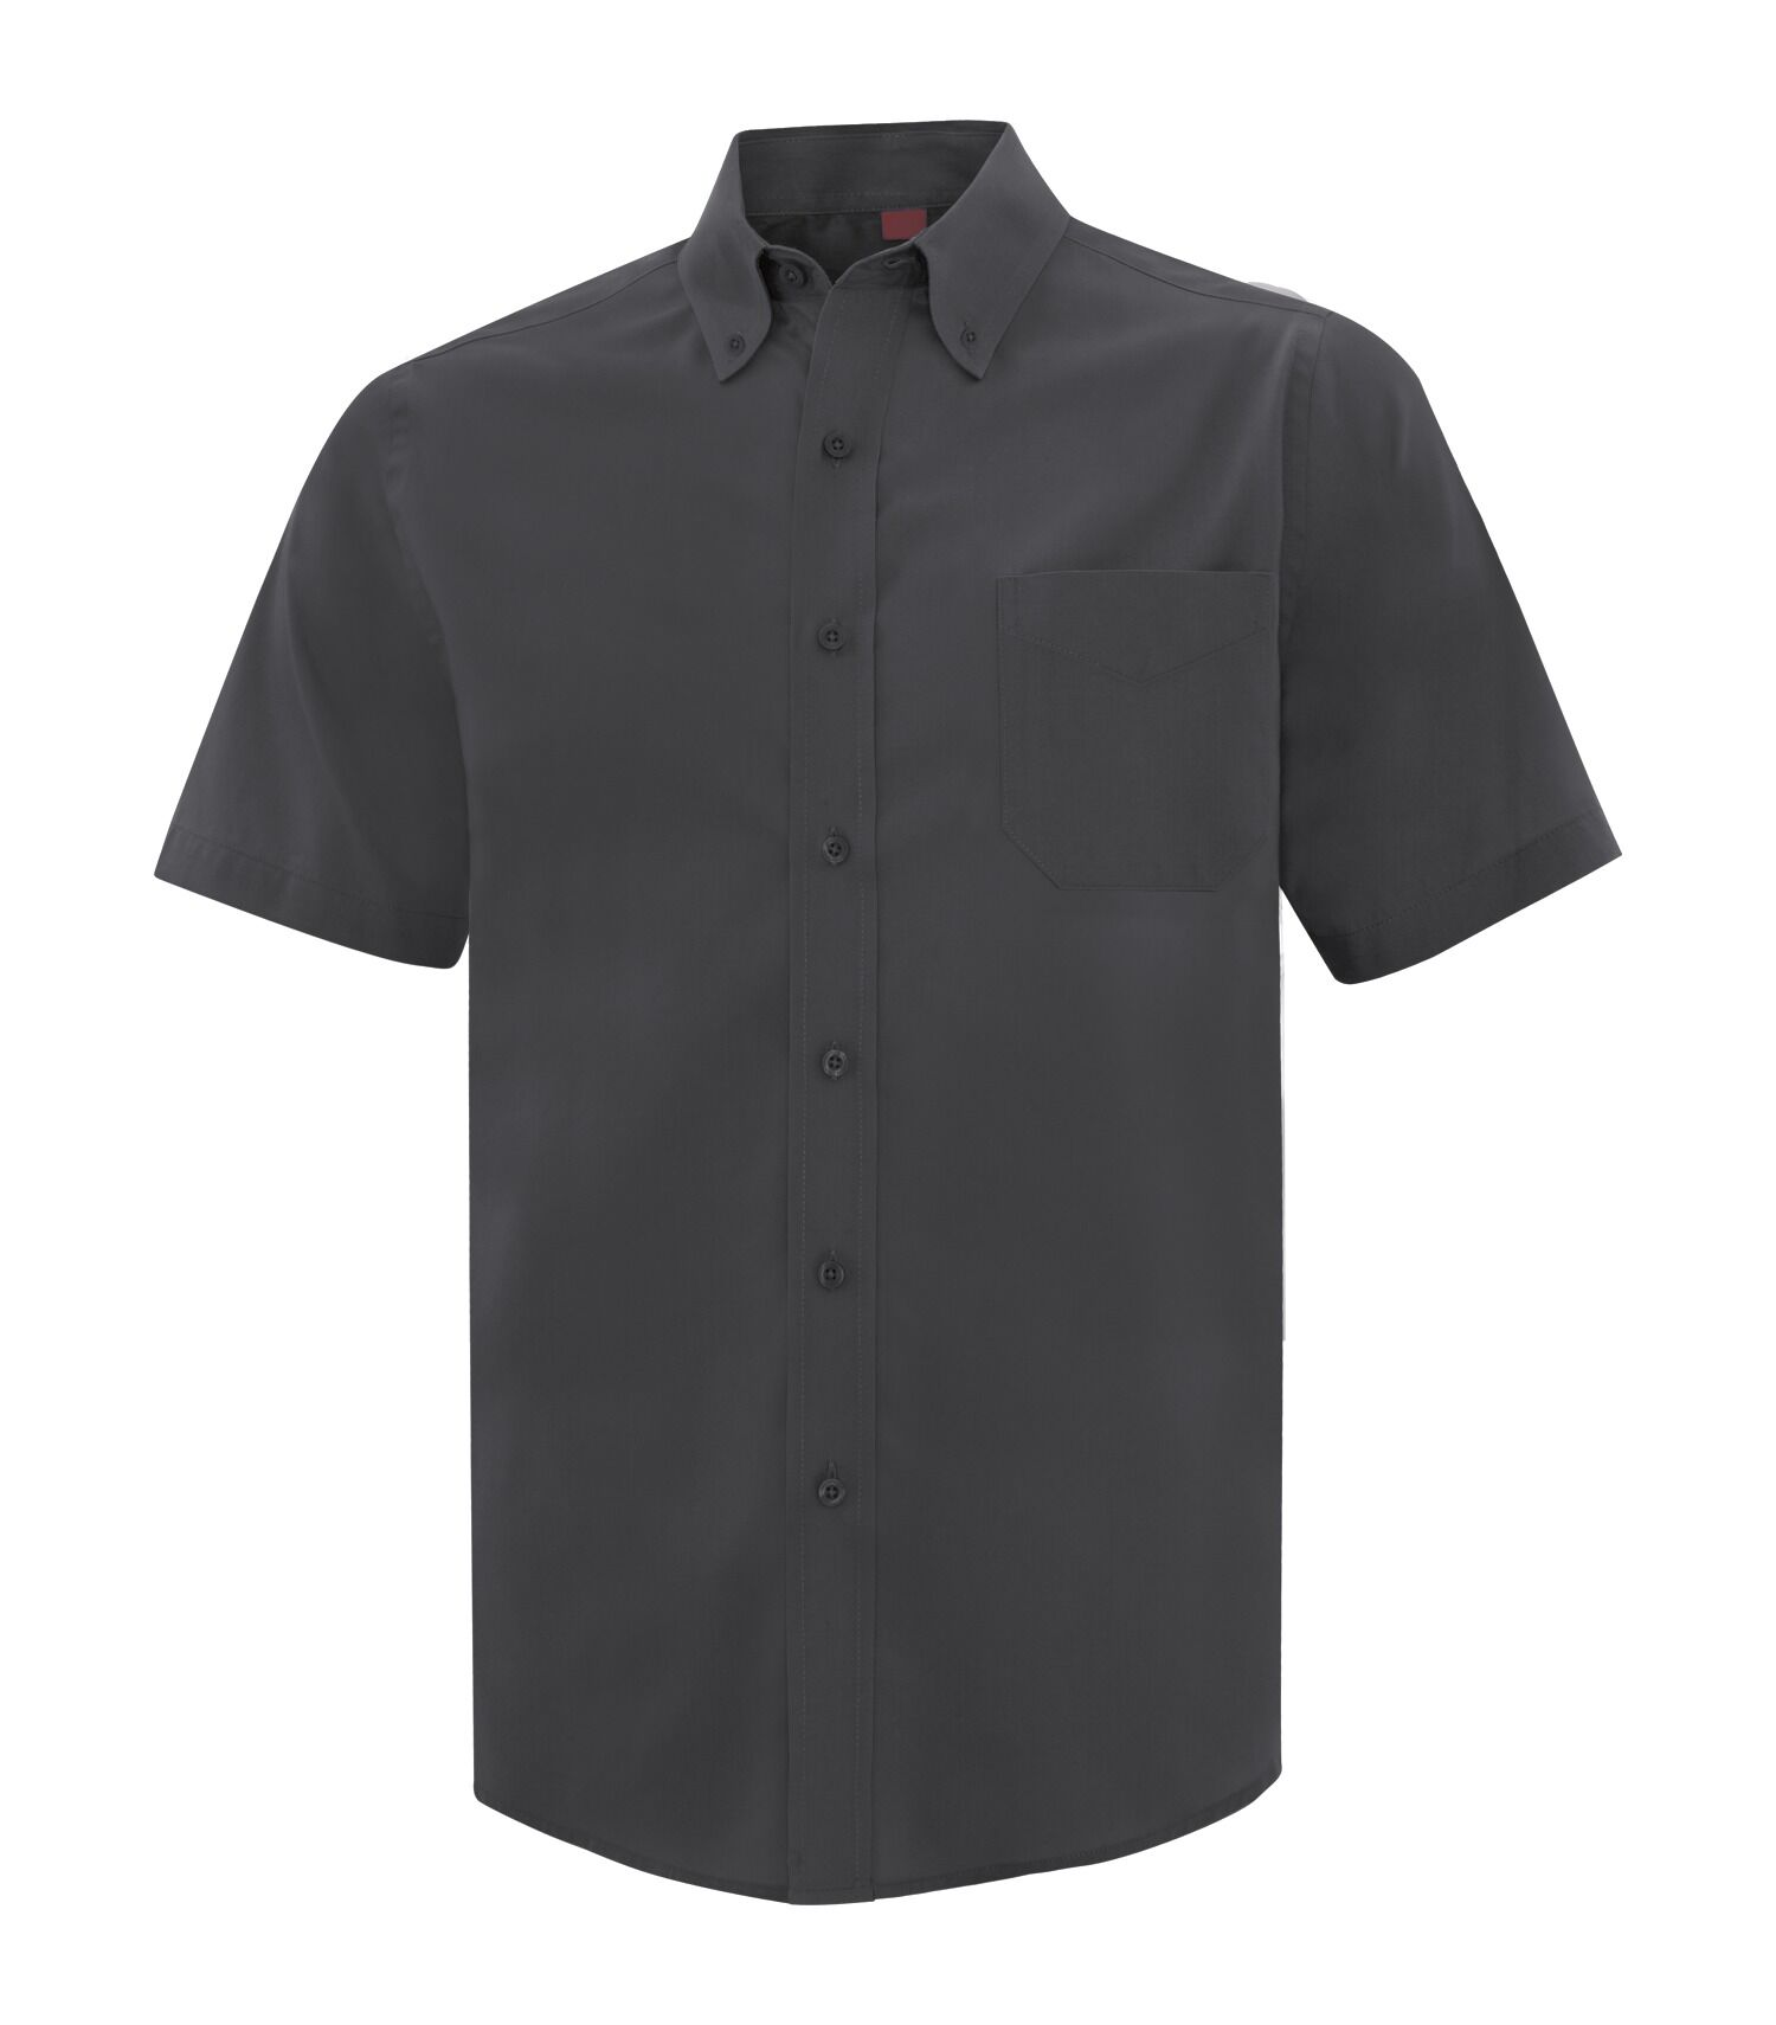 Adult Iron Grey Dress Shirt - Short Sleeve - D6021